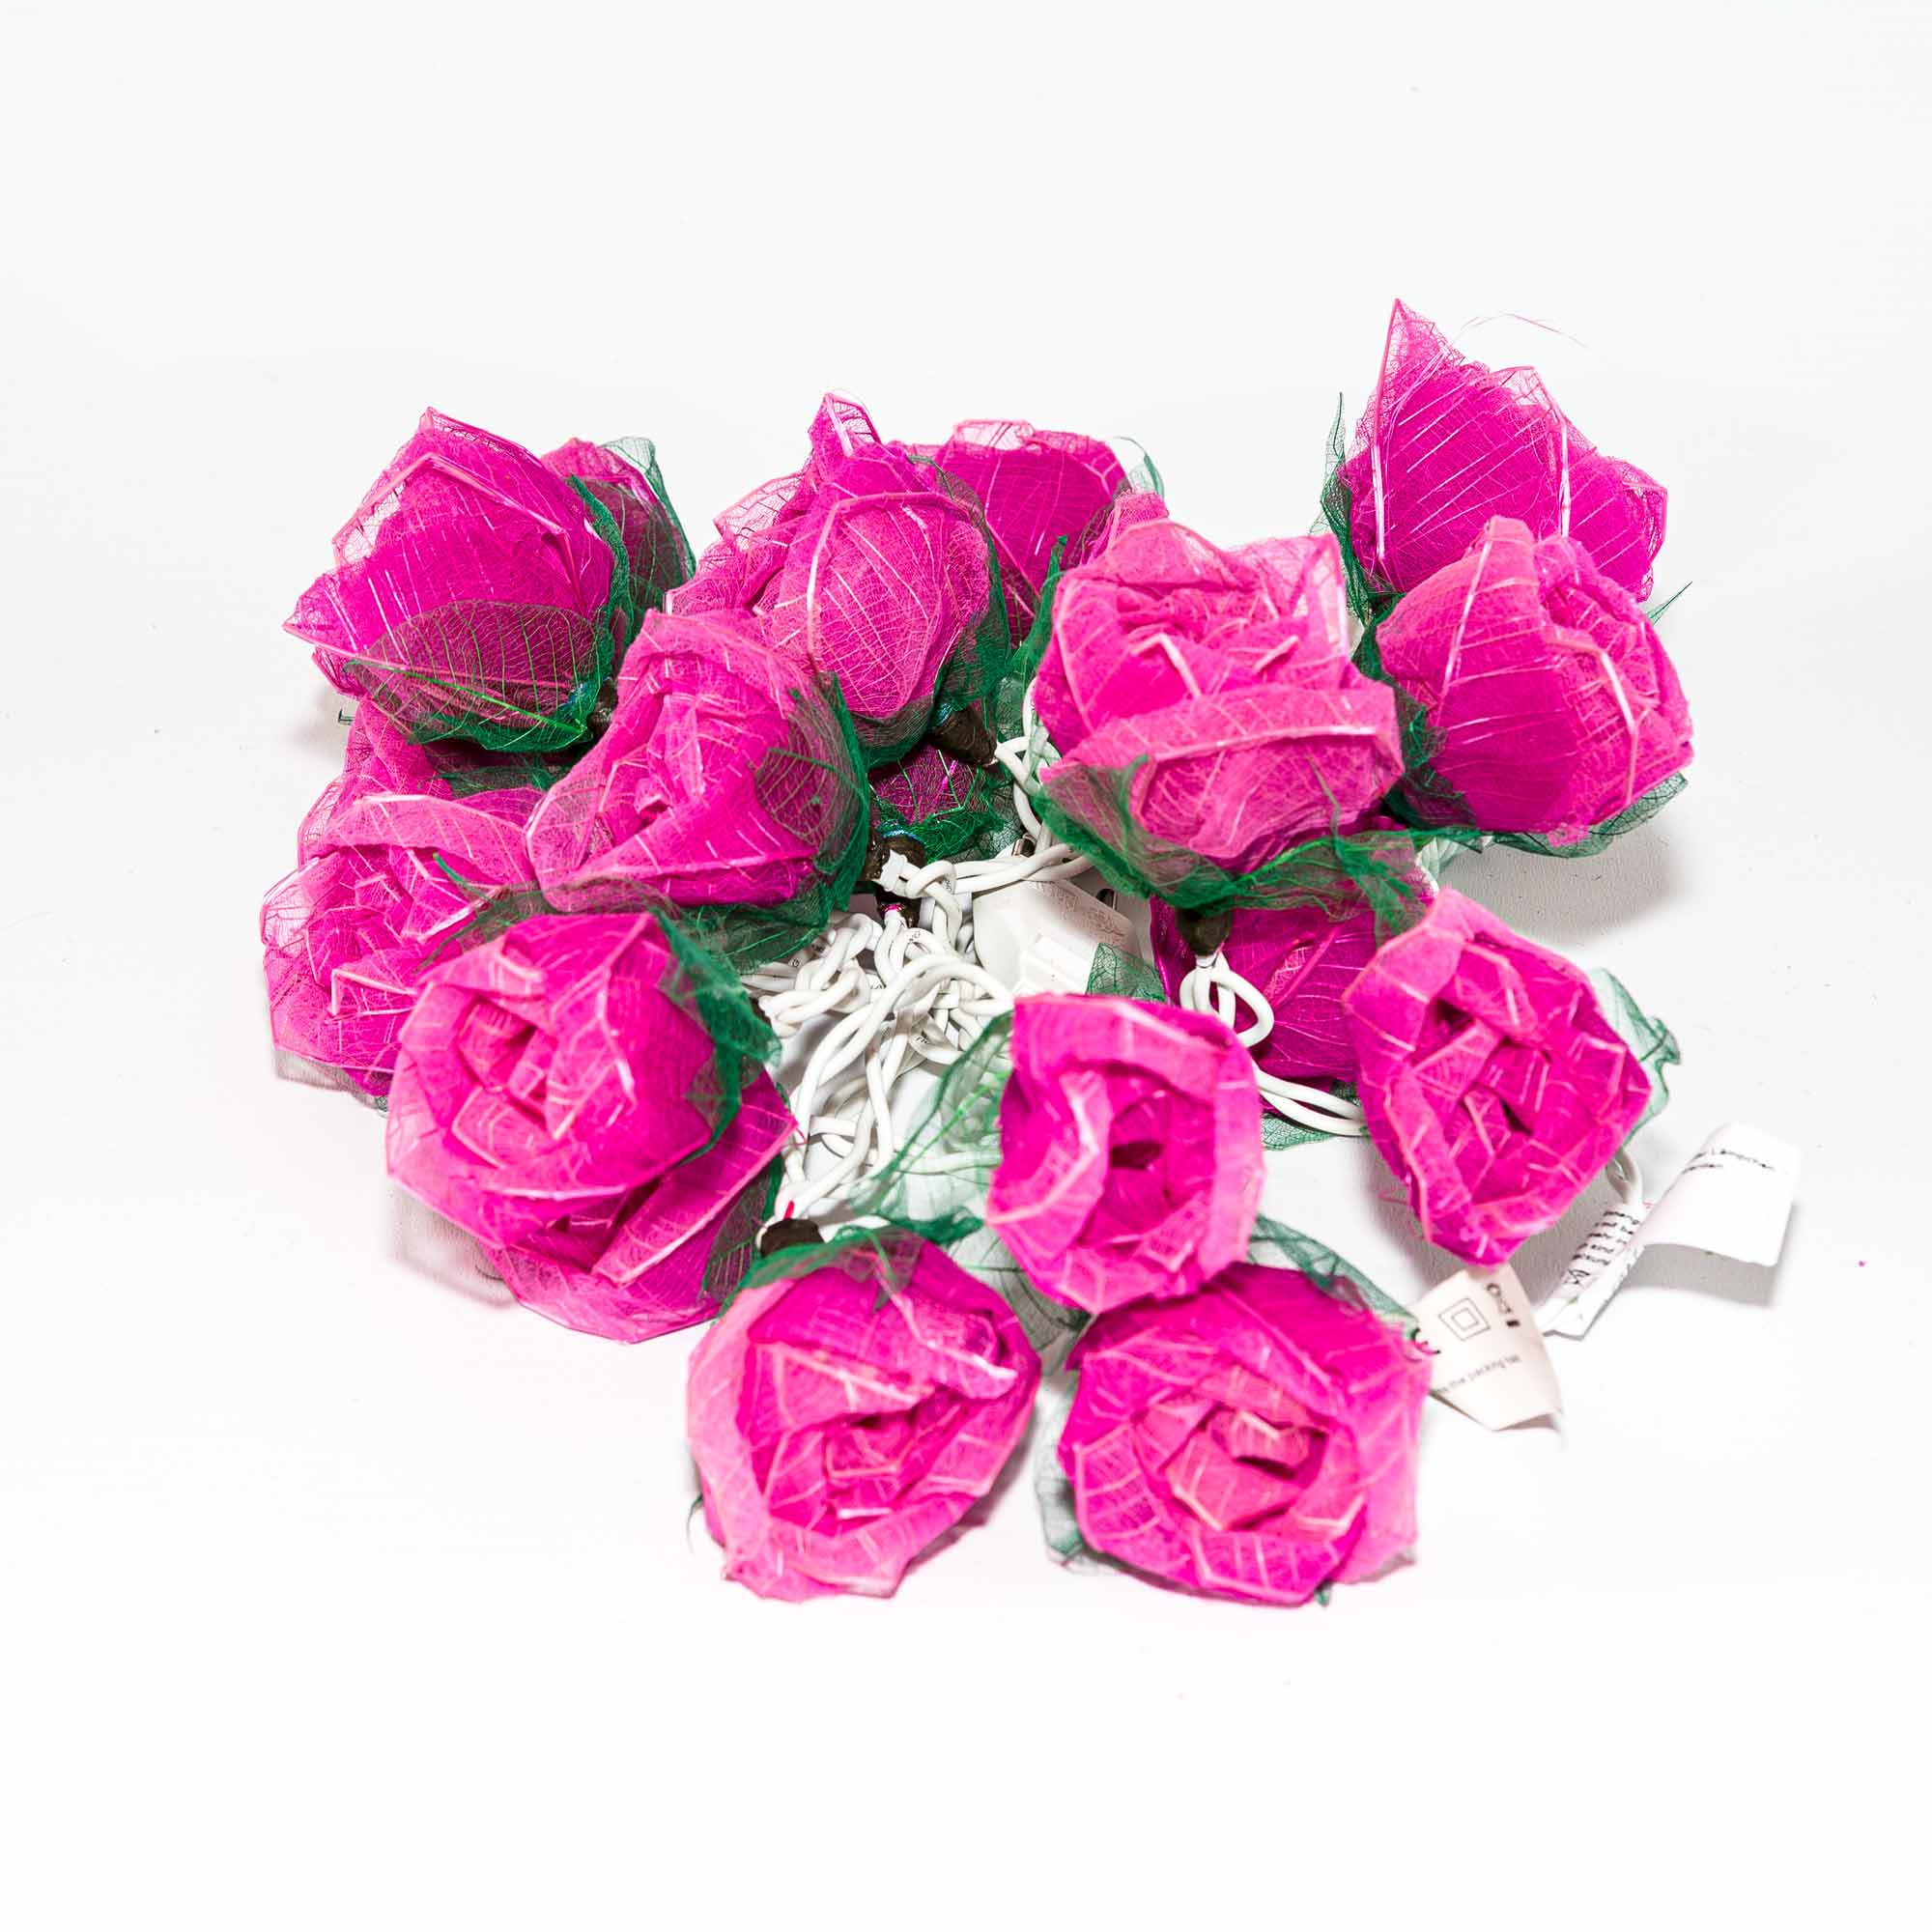 Shop Caracol Feenlichter LED-Lichterkette Groß - im Pink Rosen